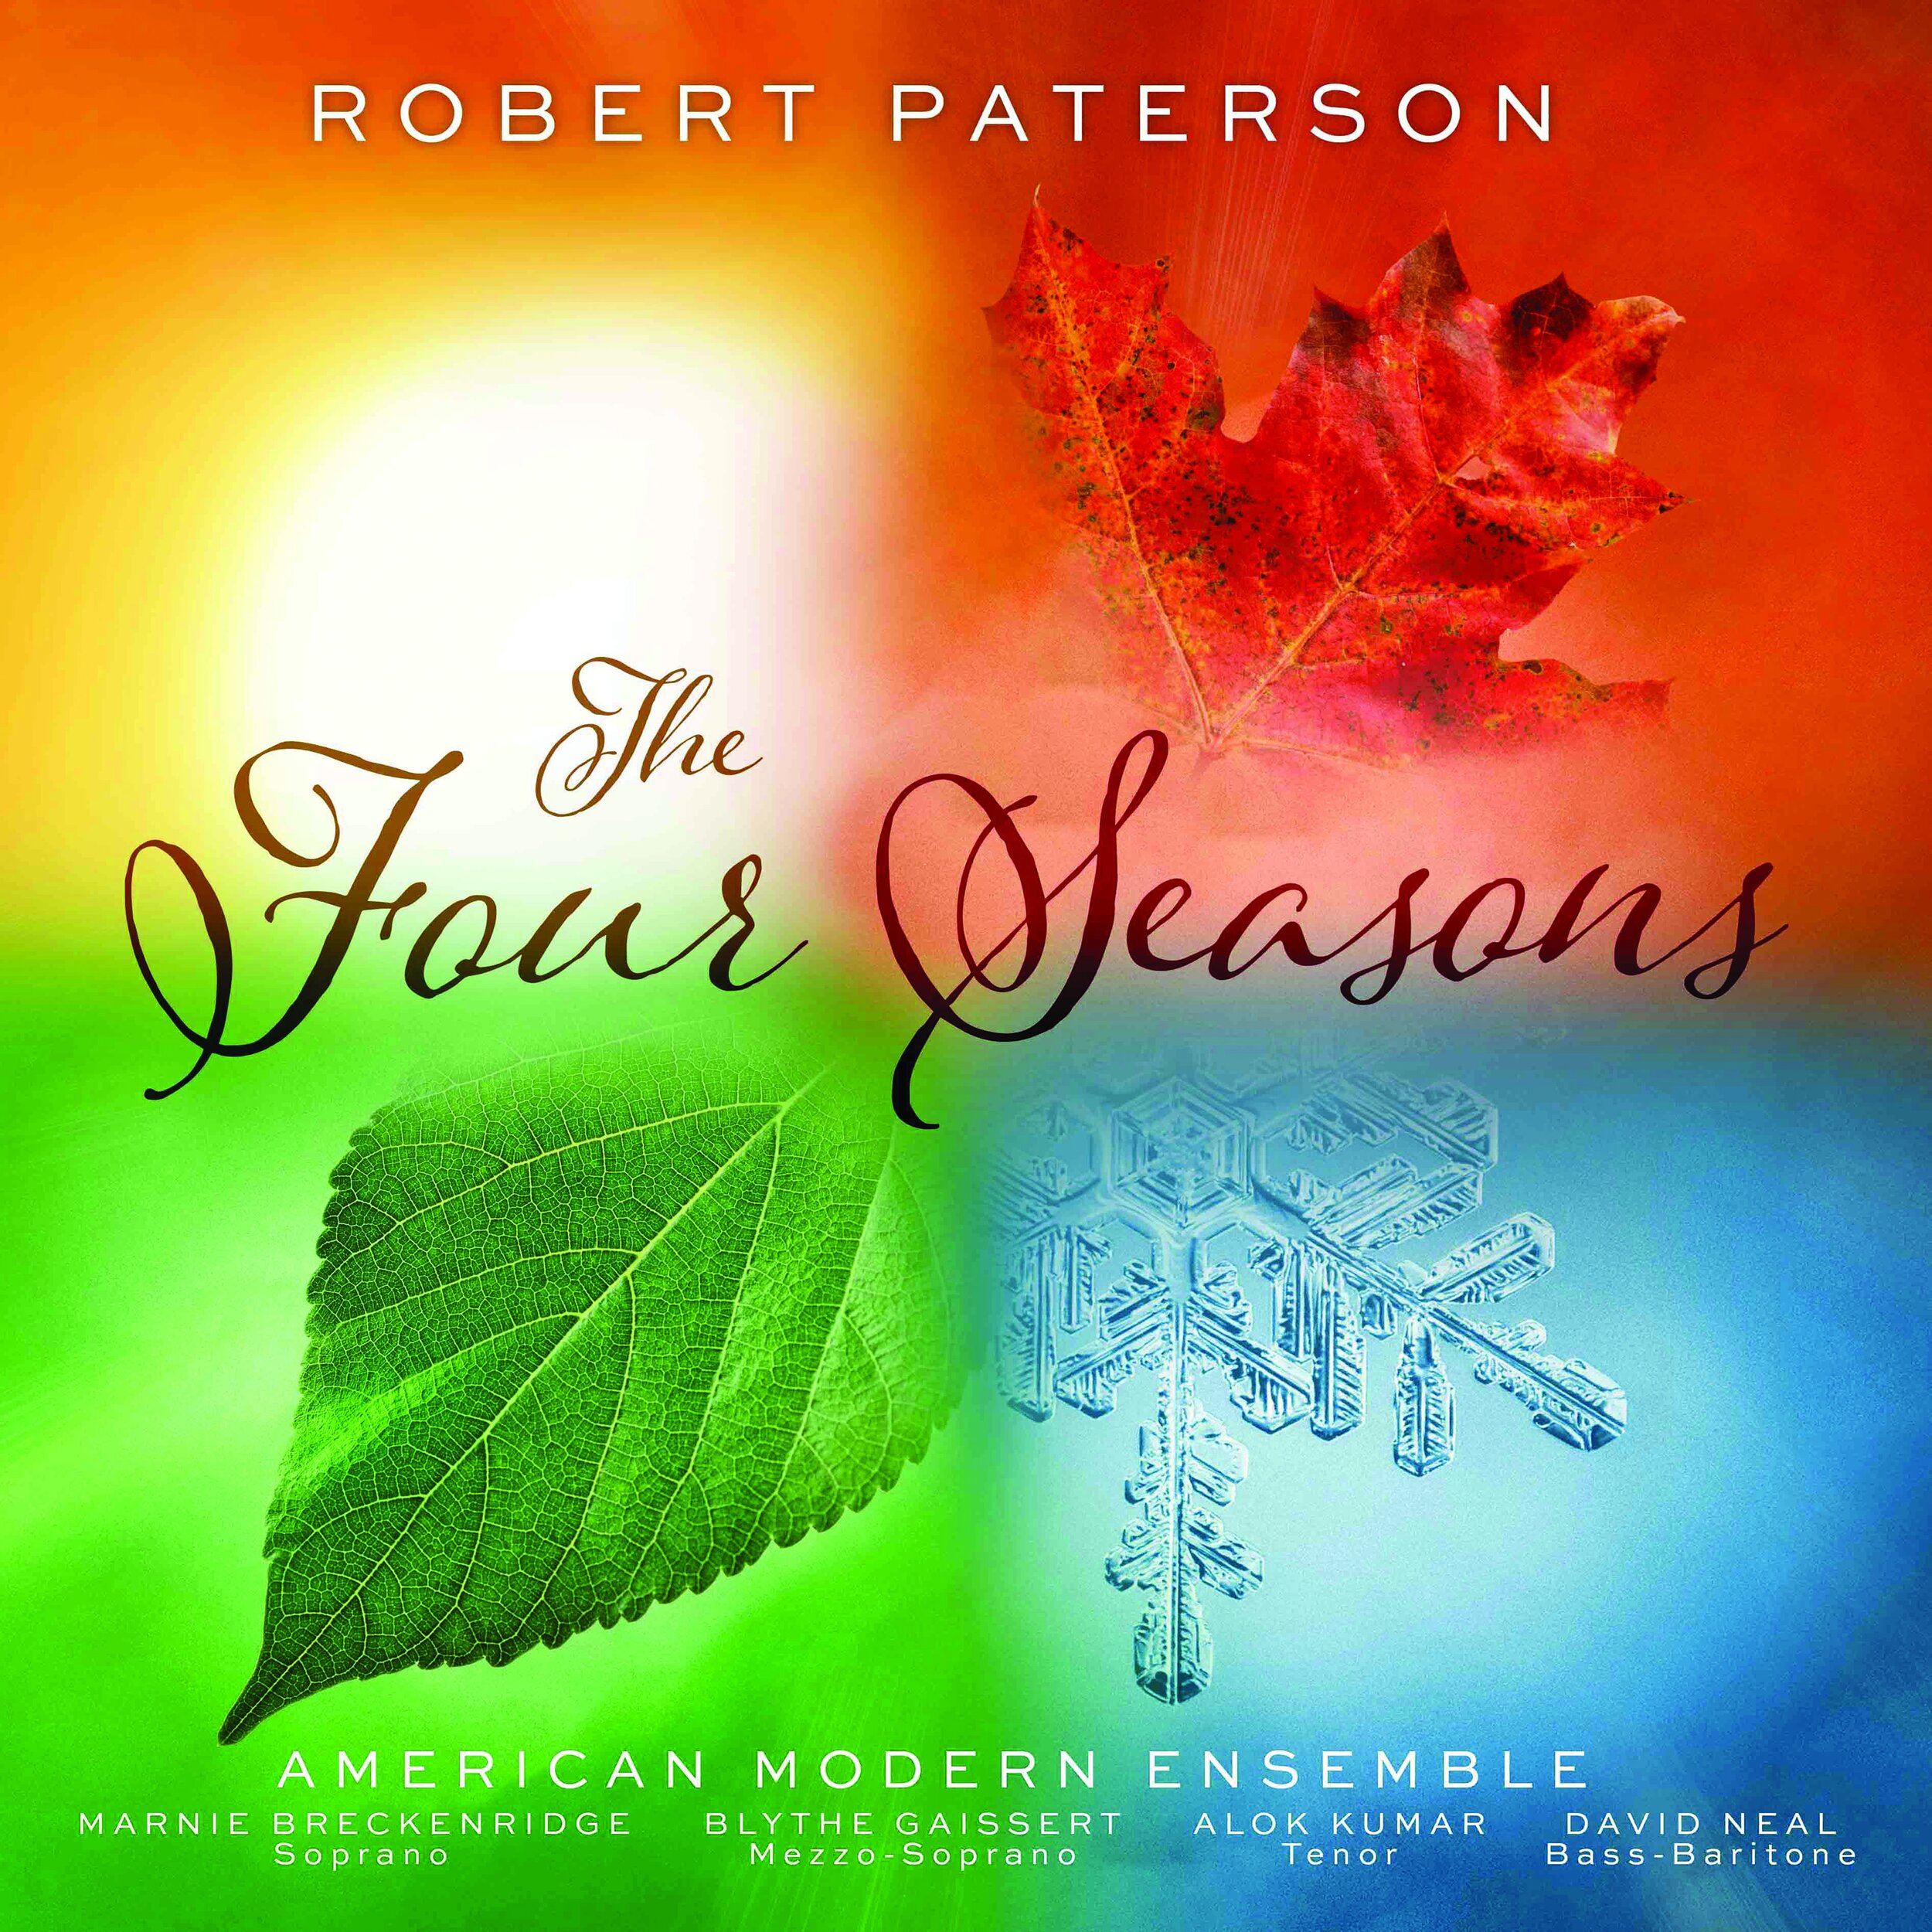 Robert Paterson and American Modern Ensemble: The Four Seasons